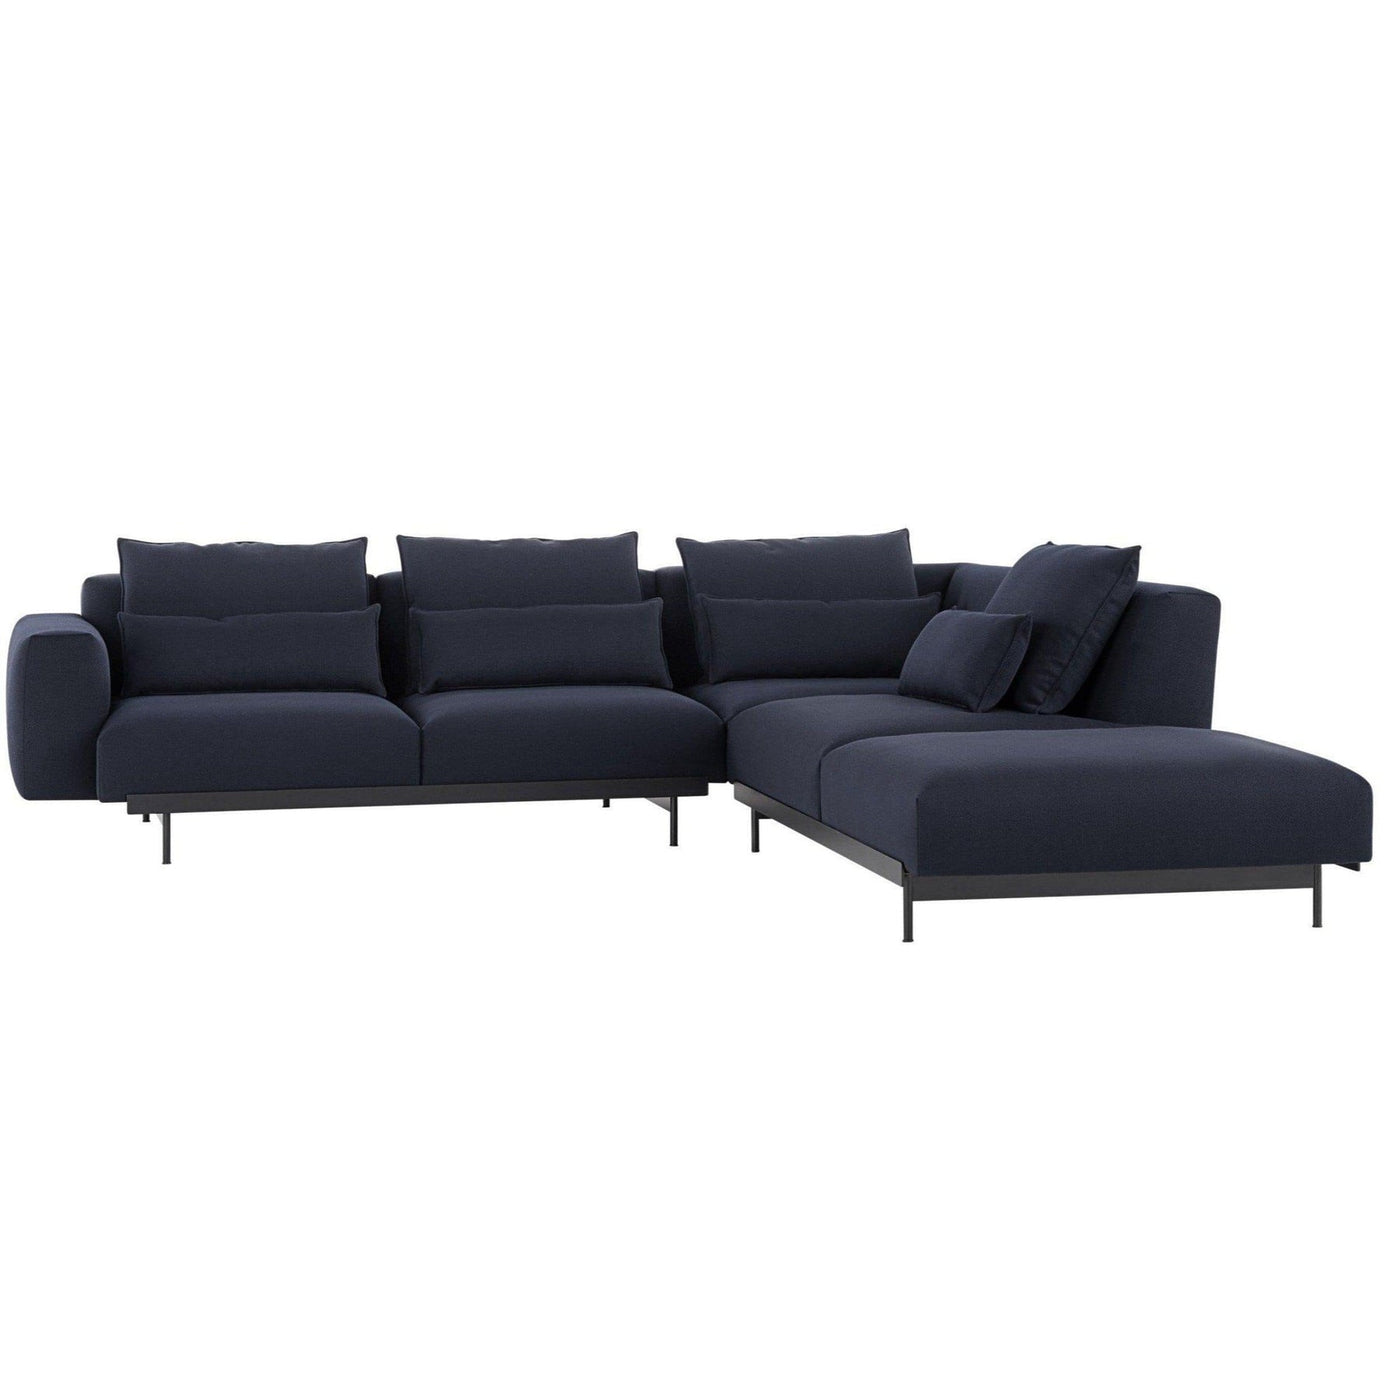 Muuto In Situ corner sofa, configuration 3 in vidar 554 fabric. Made to order from someday designs. #colour_vidar-554